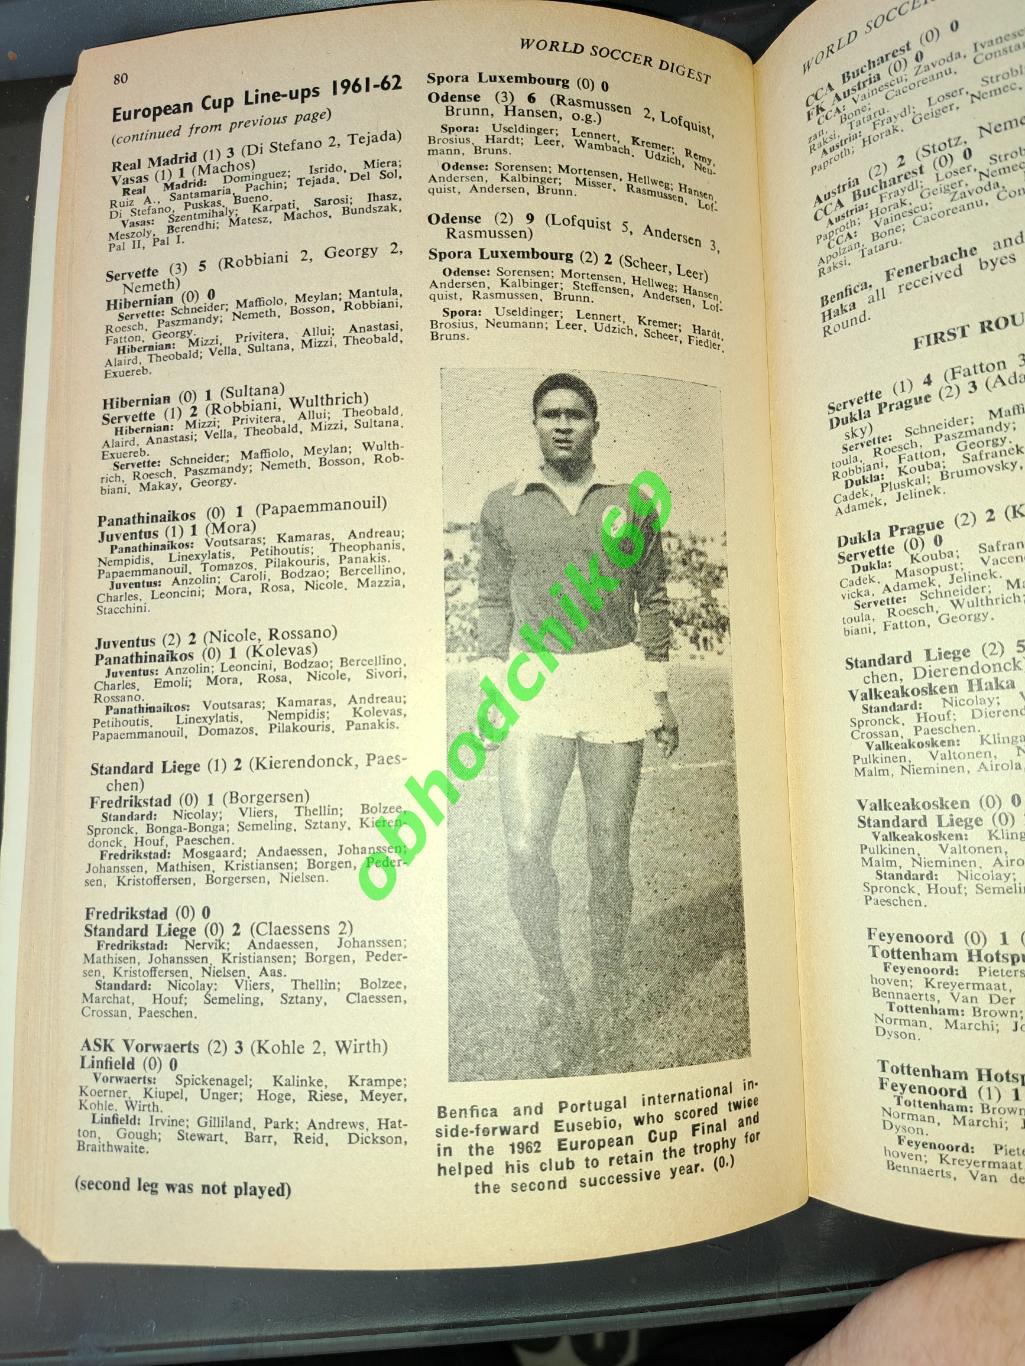 Футбол справочник World Soccer Digest 1962-63 _ Англия 3